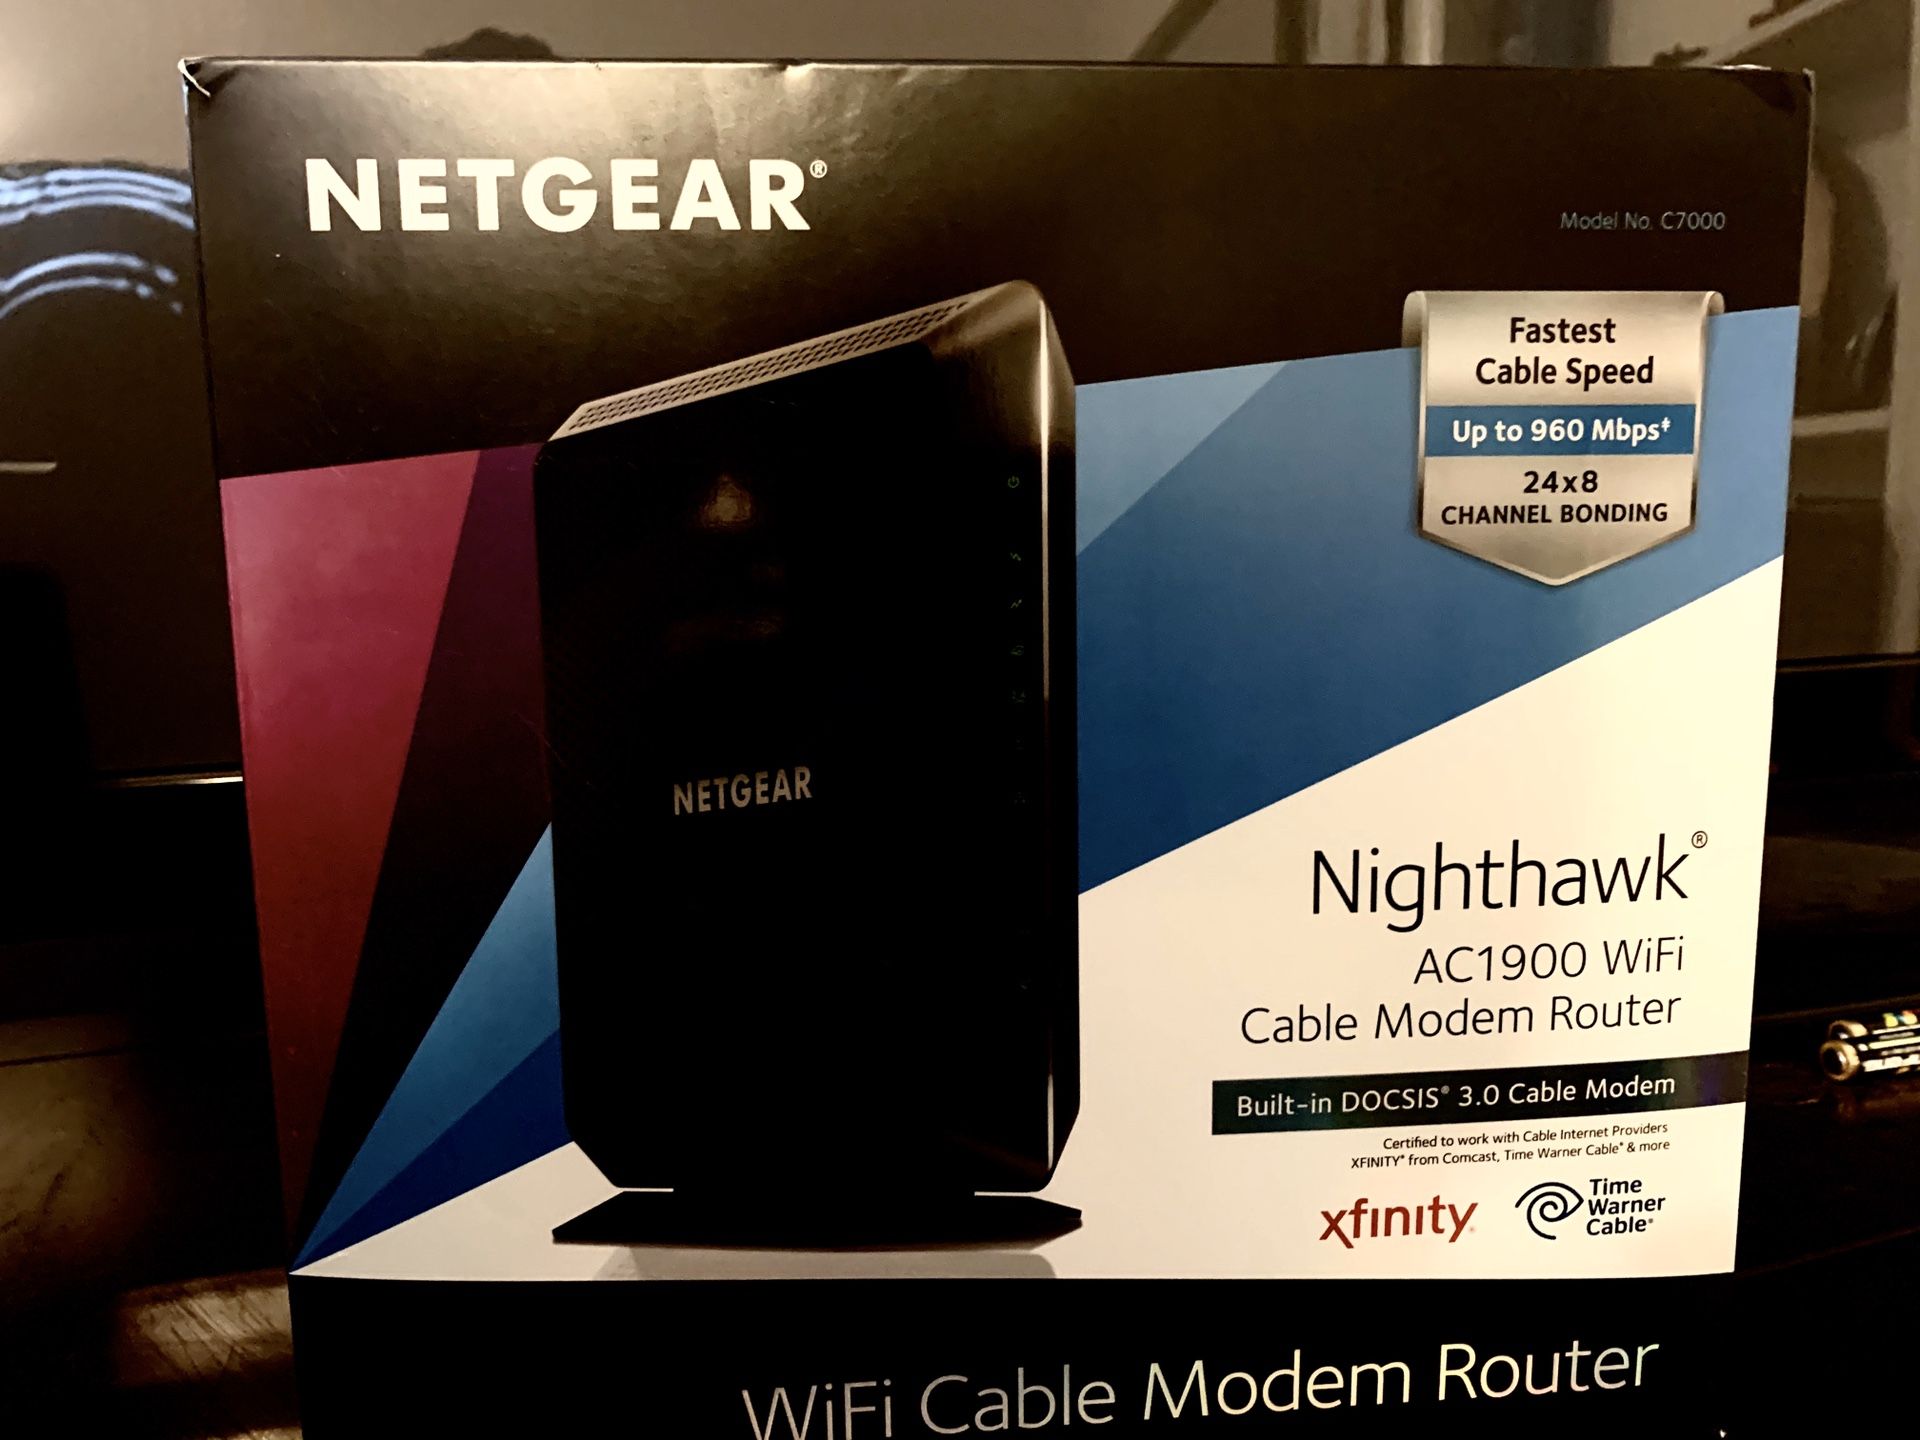 NETGEAR NIGHTHAWK Cable Modem Router - Like new